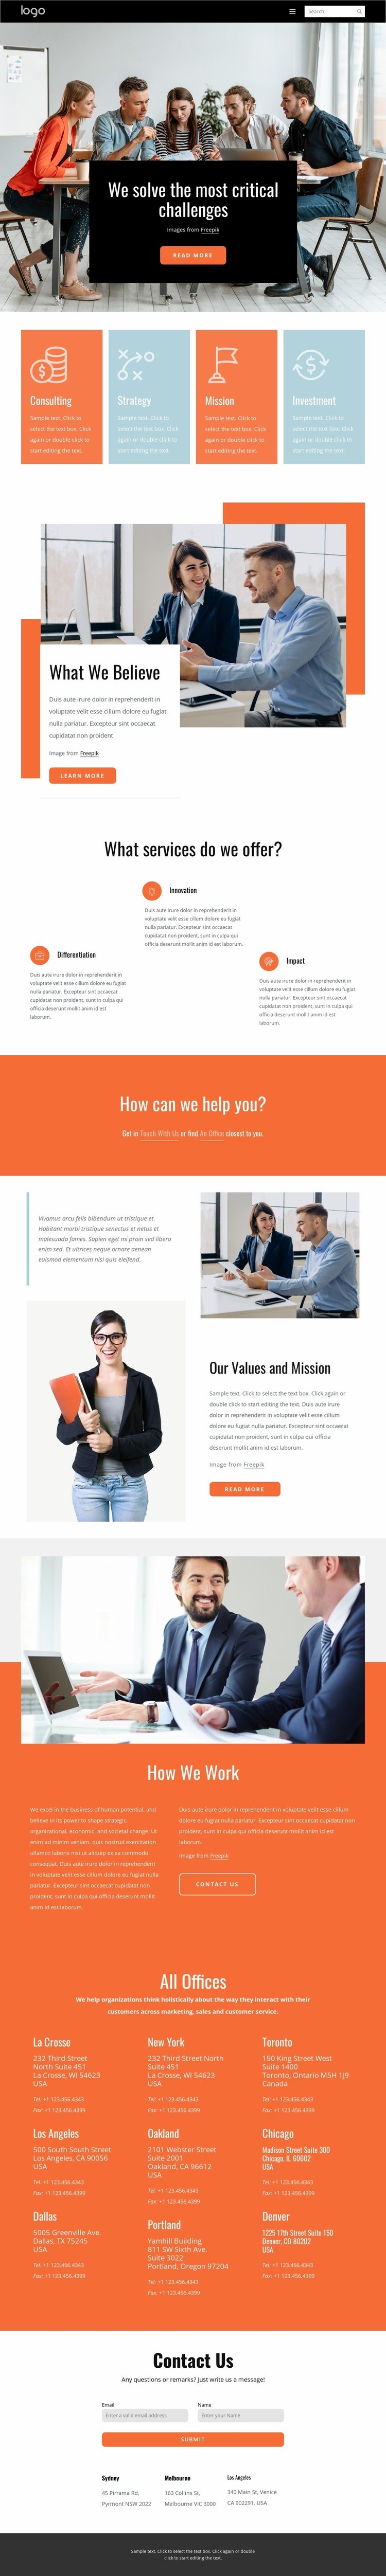 We help clients solve complex business problems Homepage Design